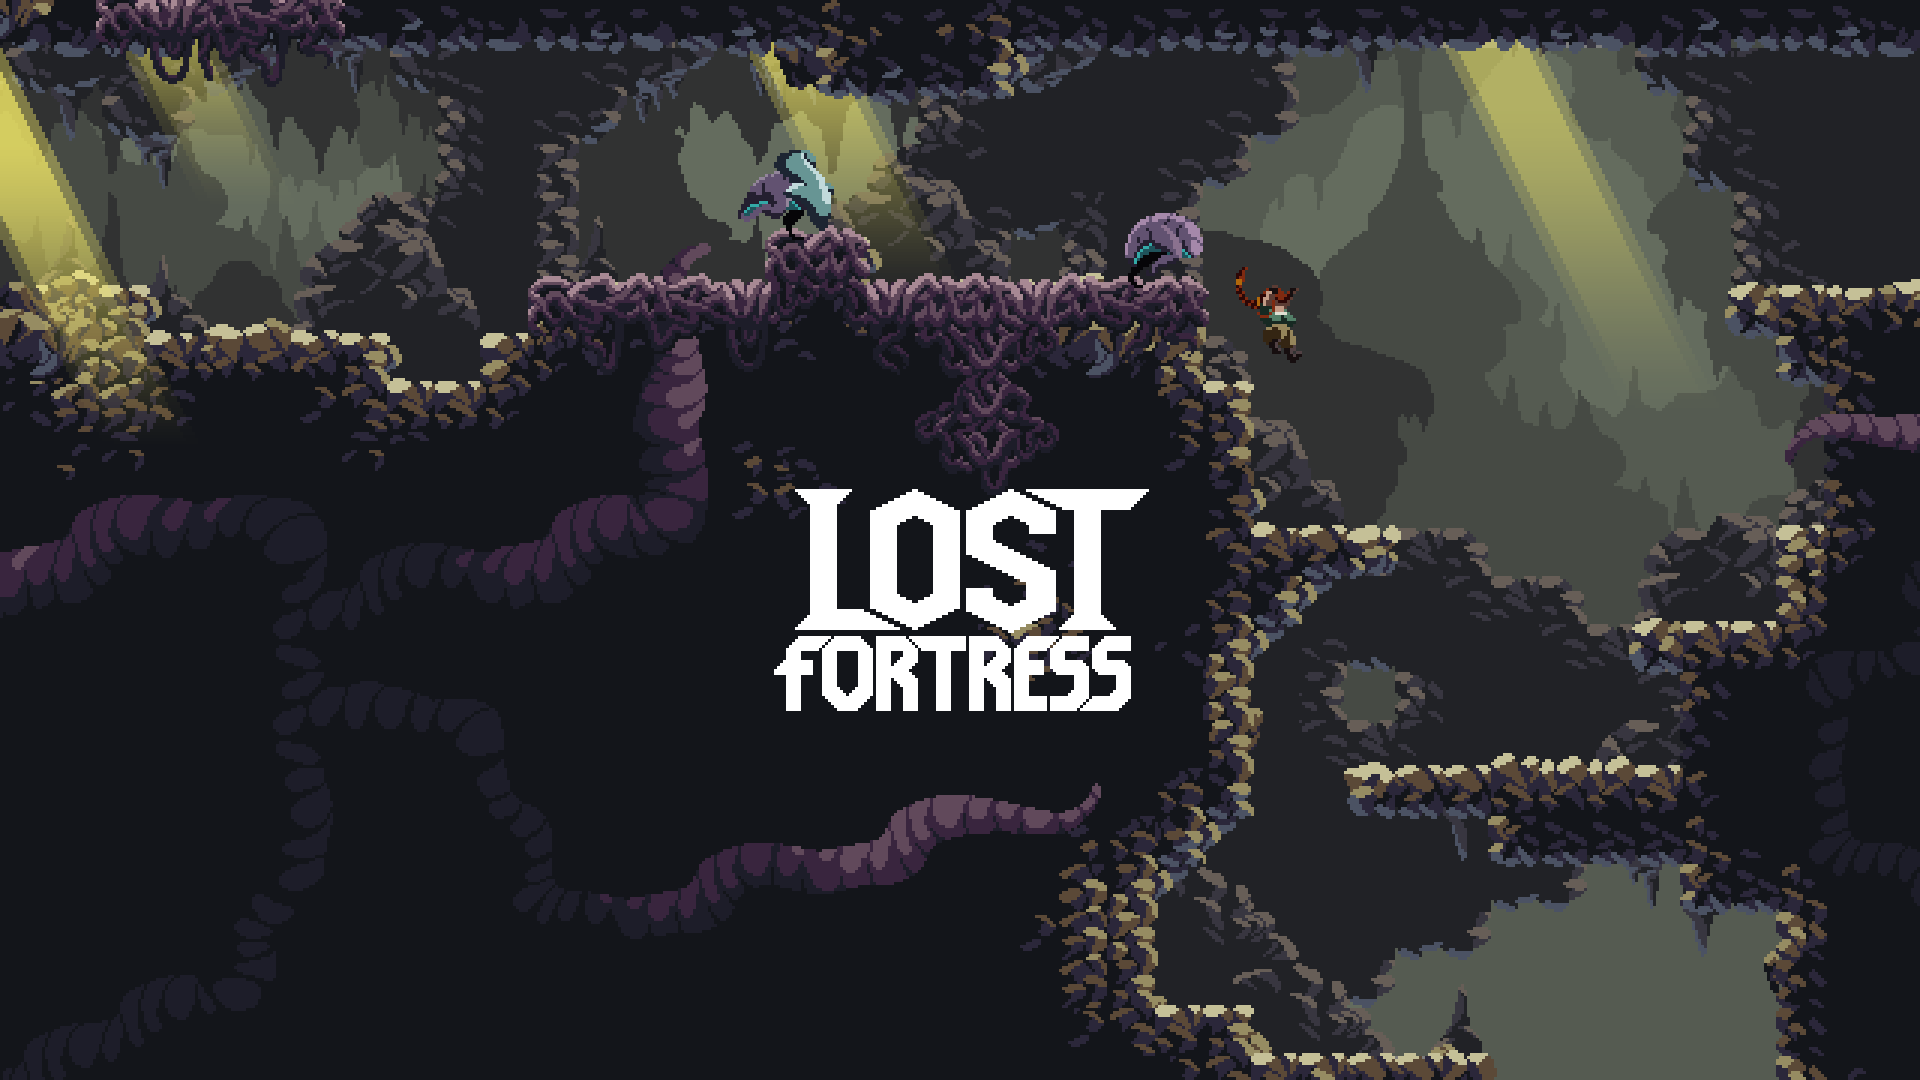 Lost Fortress